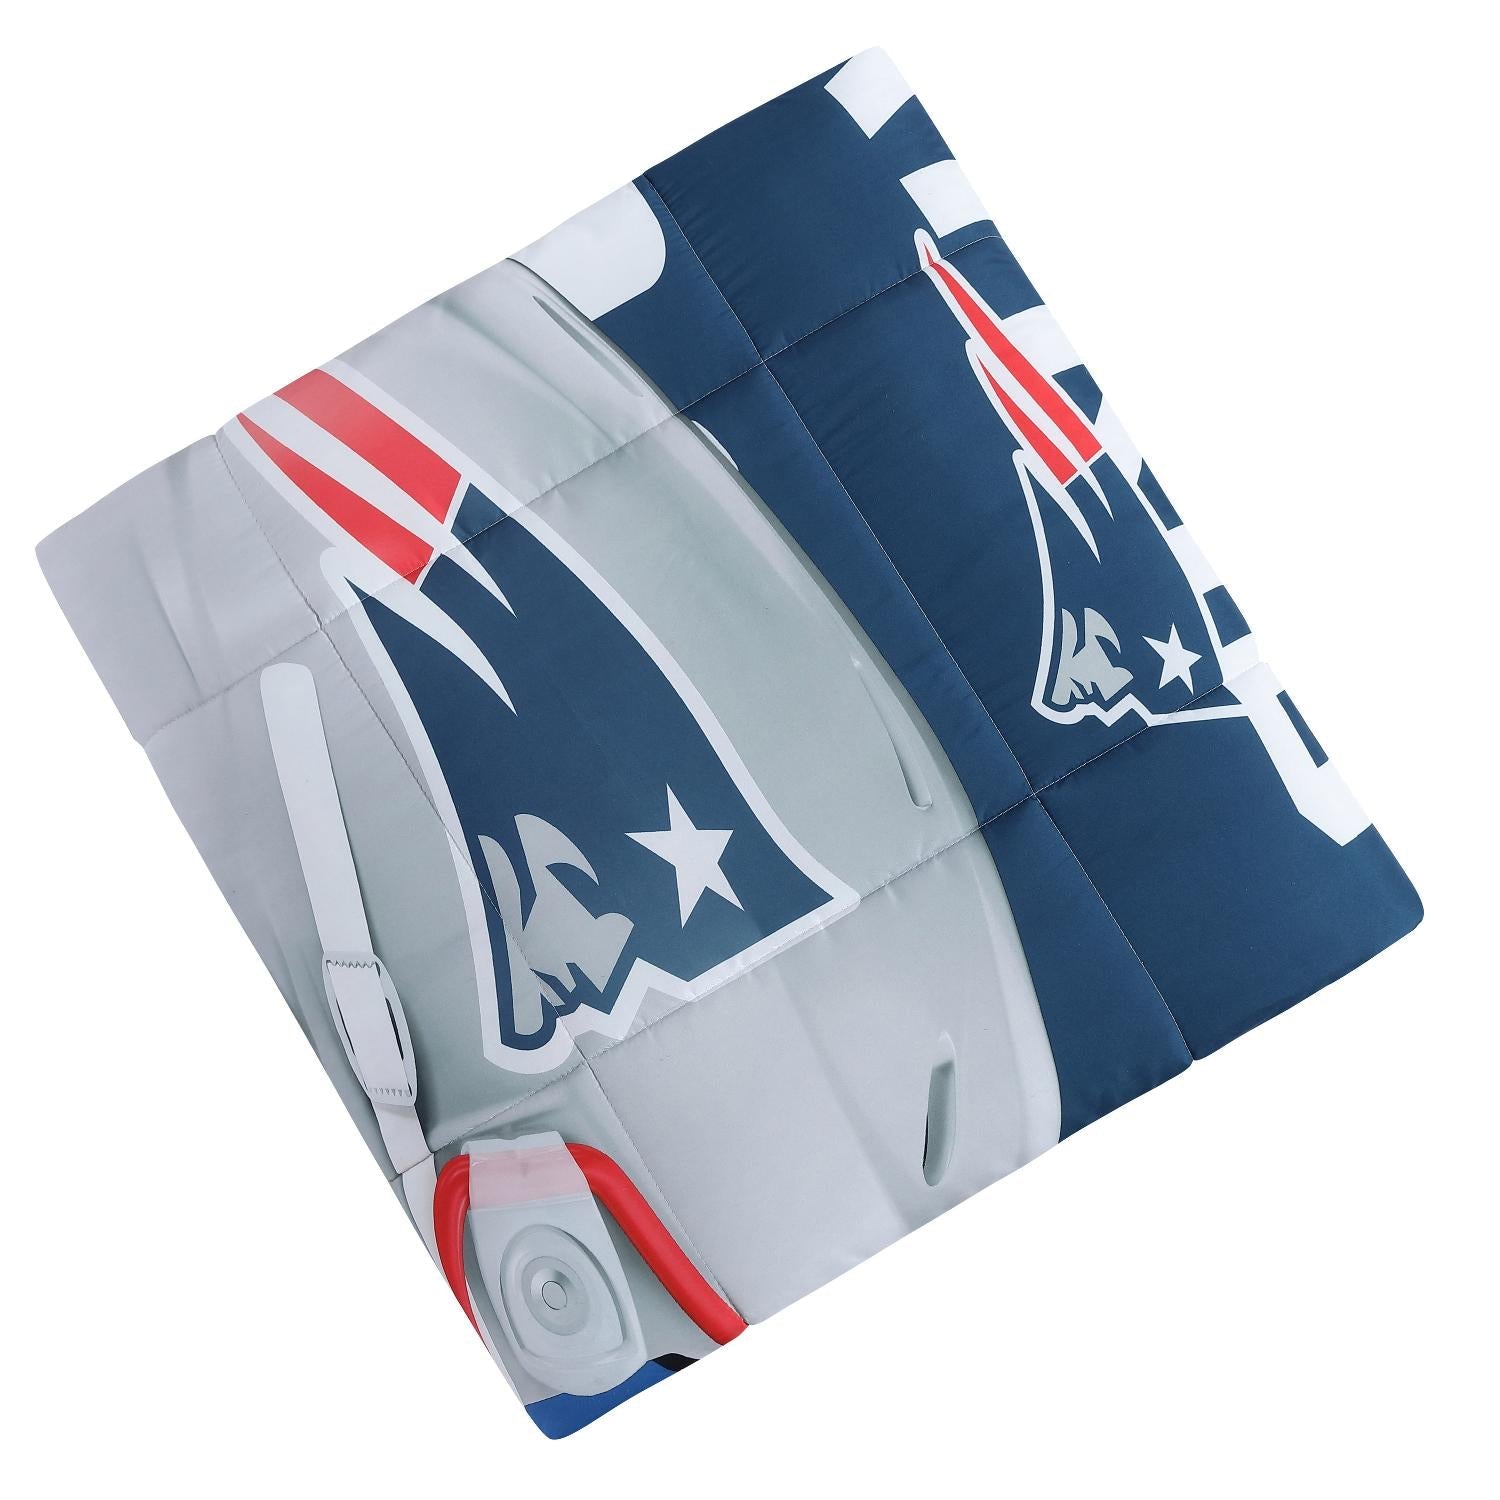 New England Patriots NFL Officially Licensed 3-Piece Comforter Set - Comforter